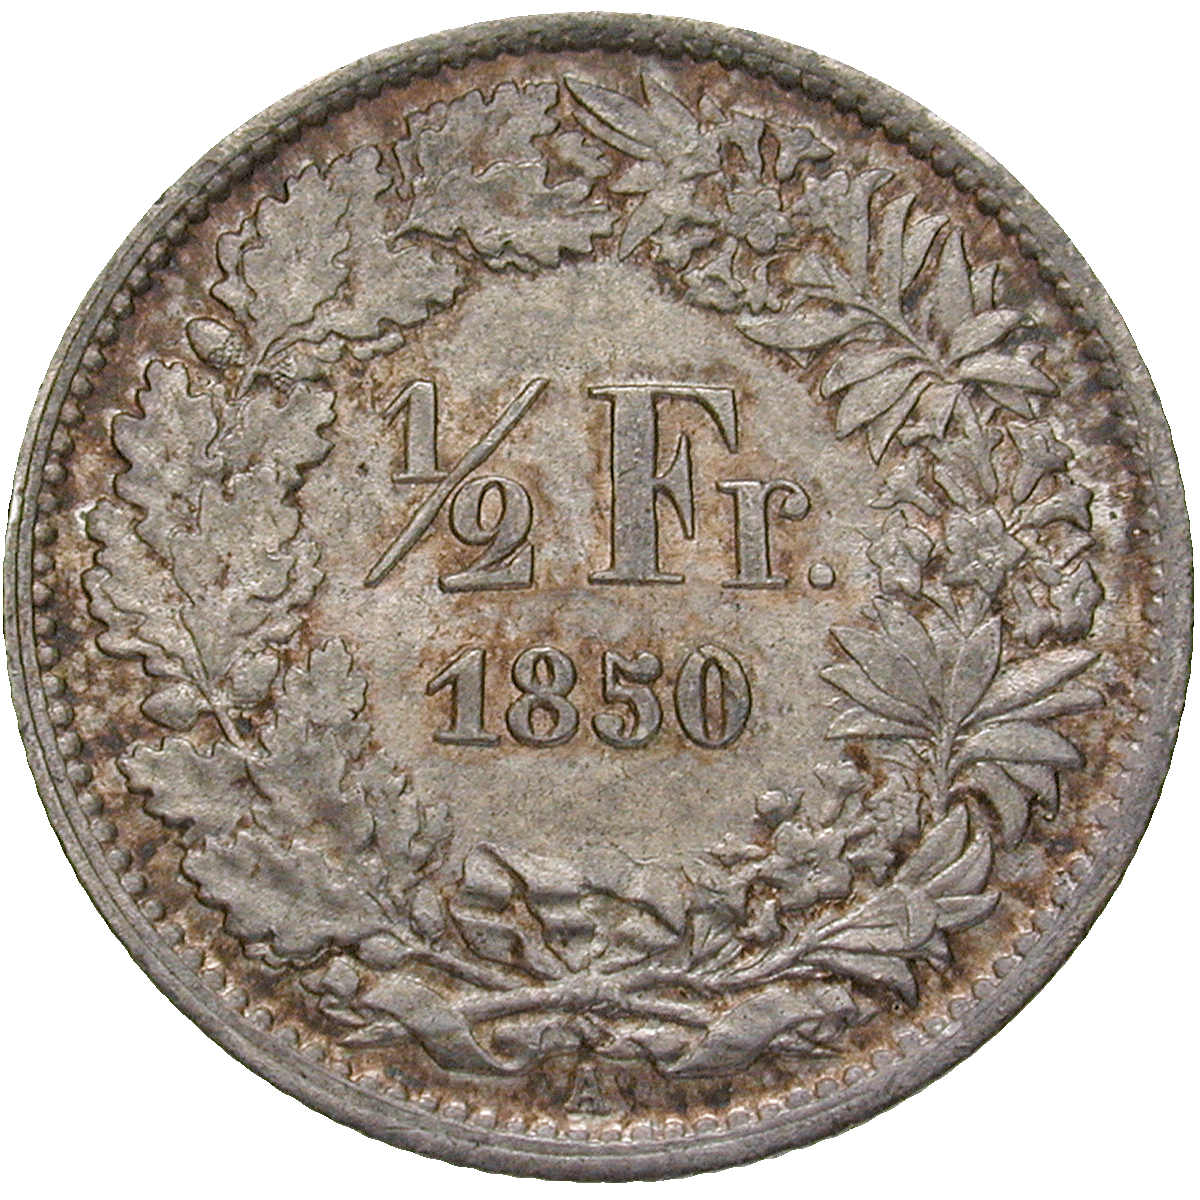 Swiss Confederation, 1/2 Franc 1850 (reverse)